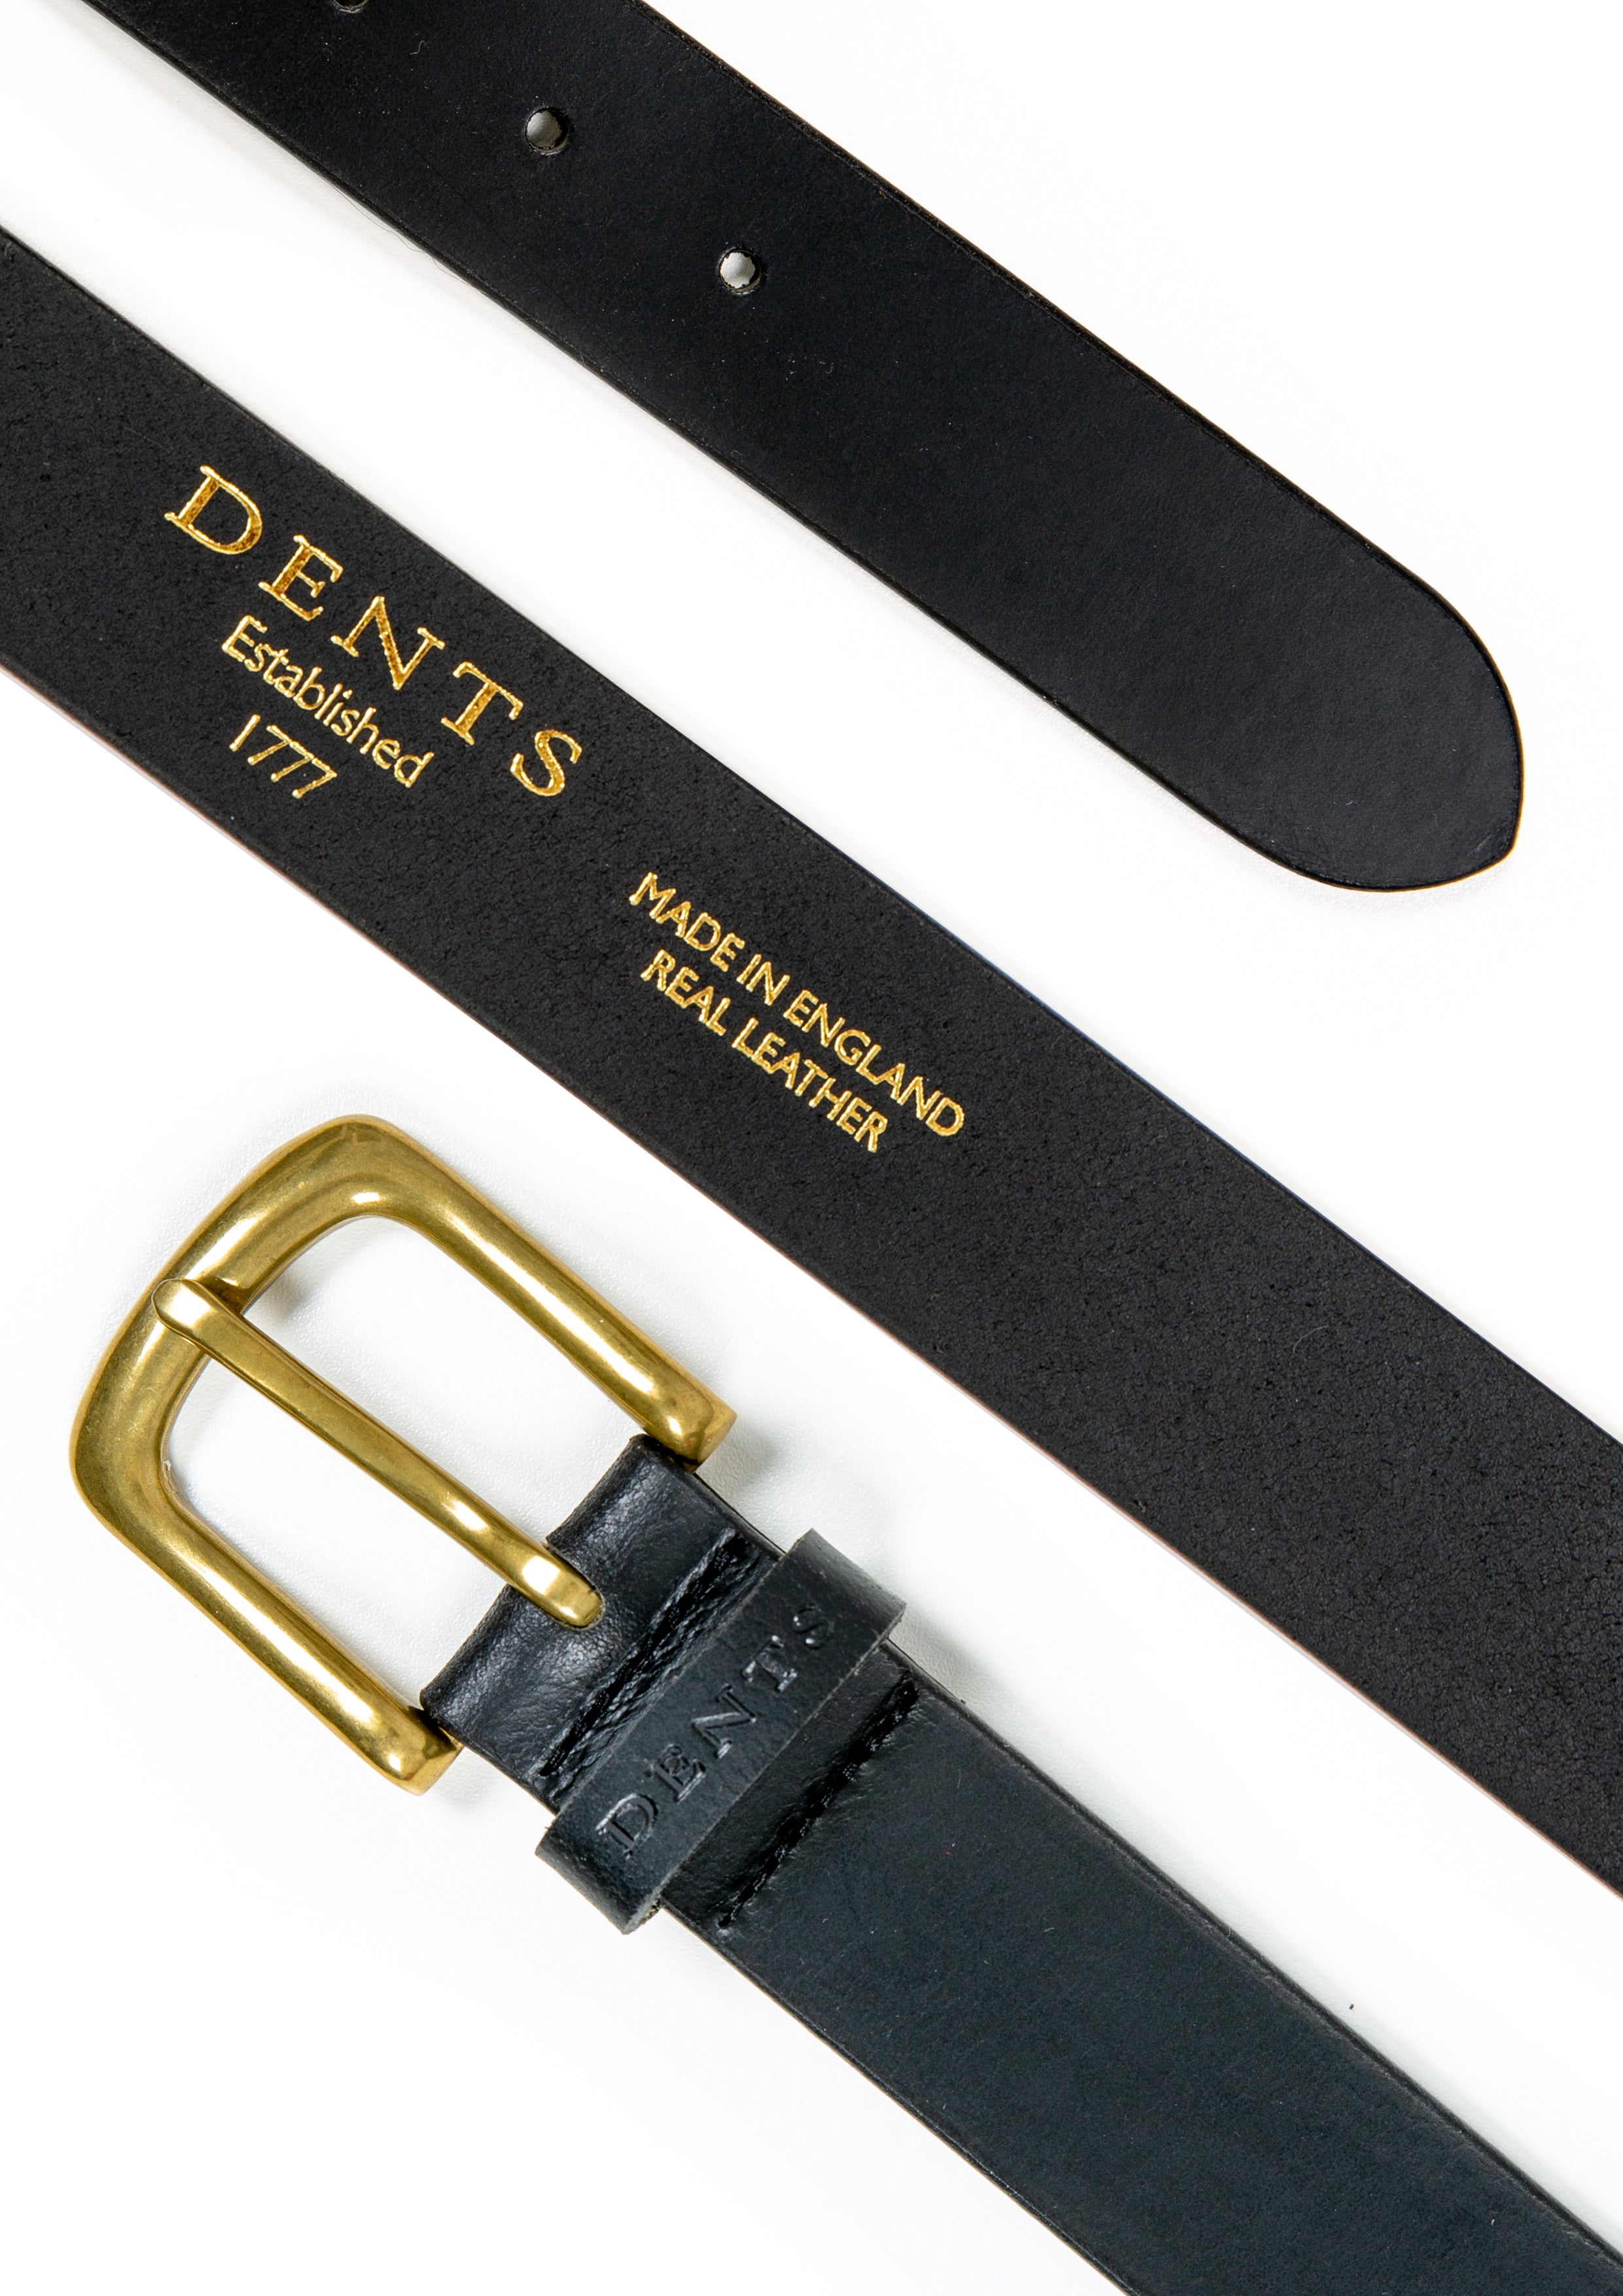 Acne Studios - Leather buckle belt - Black/gold